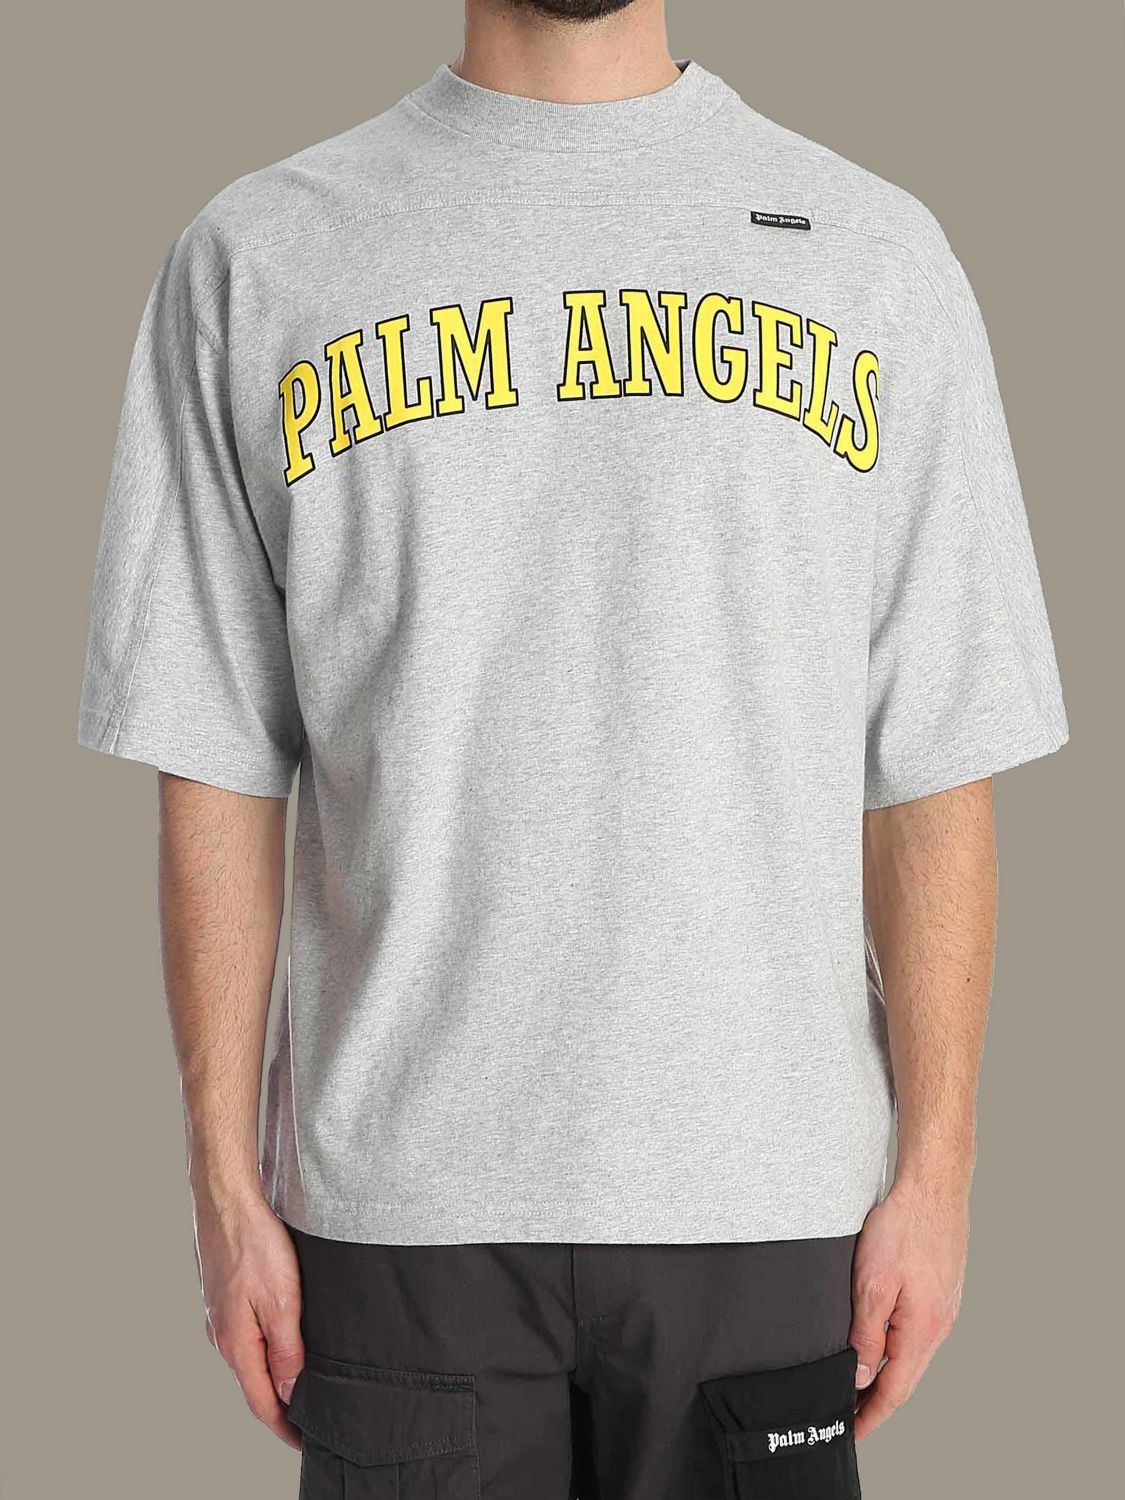 palm angels shirt